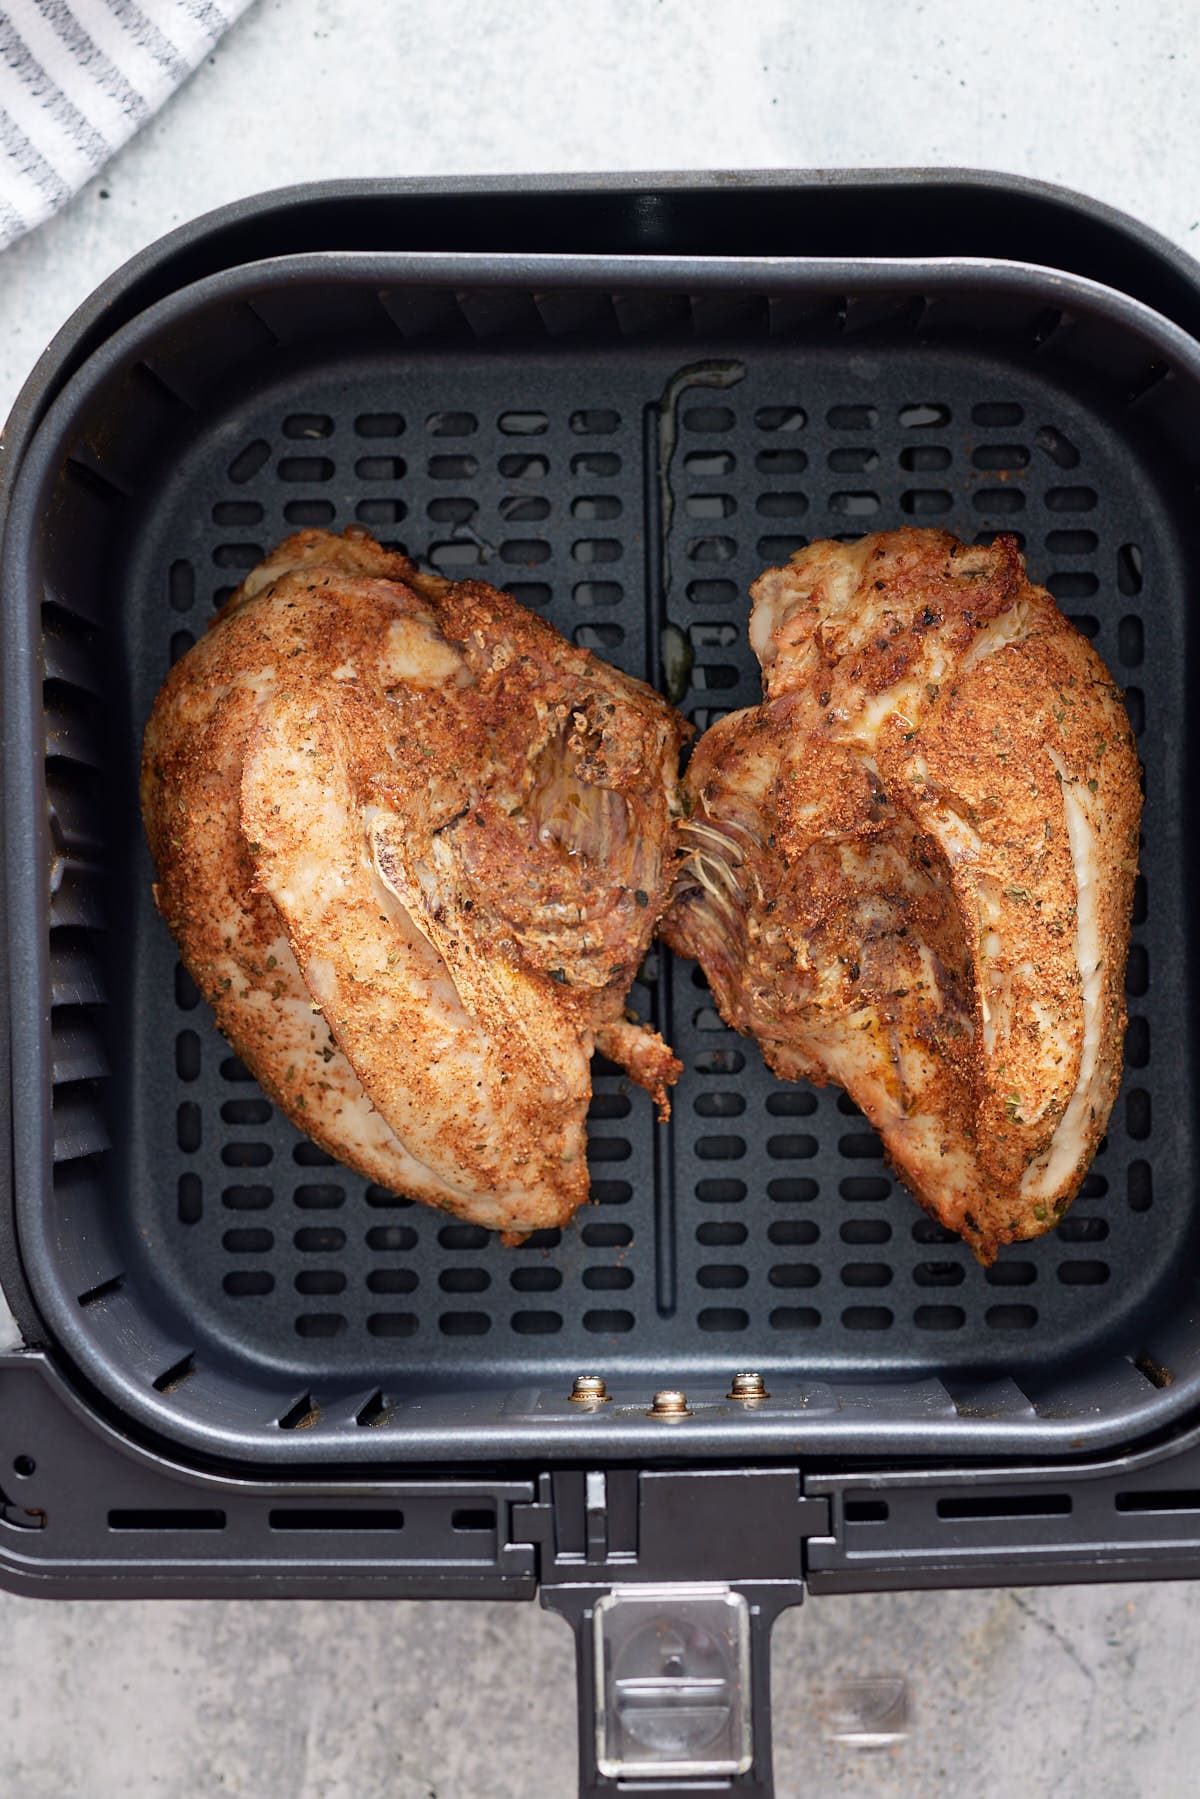 bone-in chicken breasts in air fryer basket